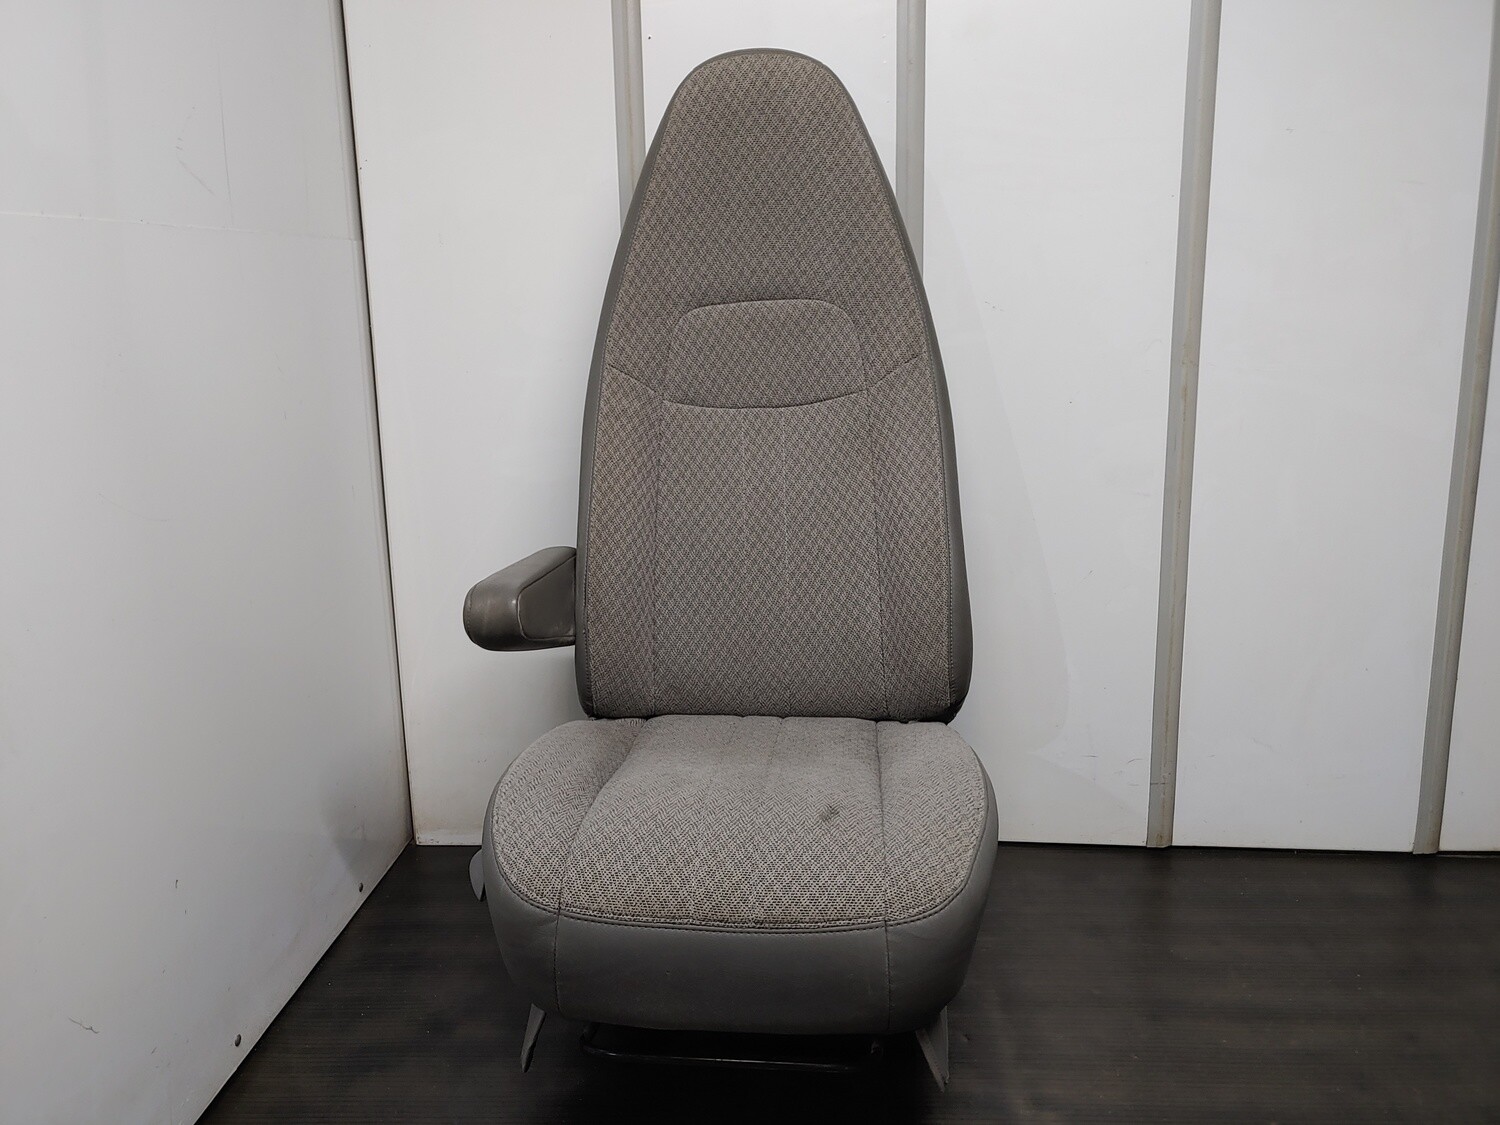 Chevy Express / GMC Savana Driver Seat - High Back